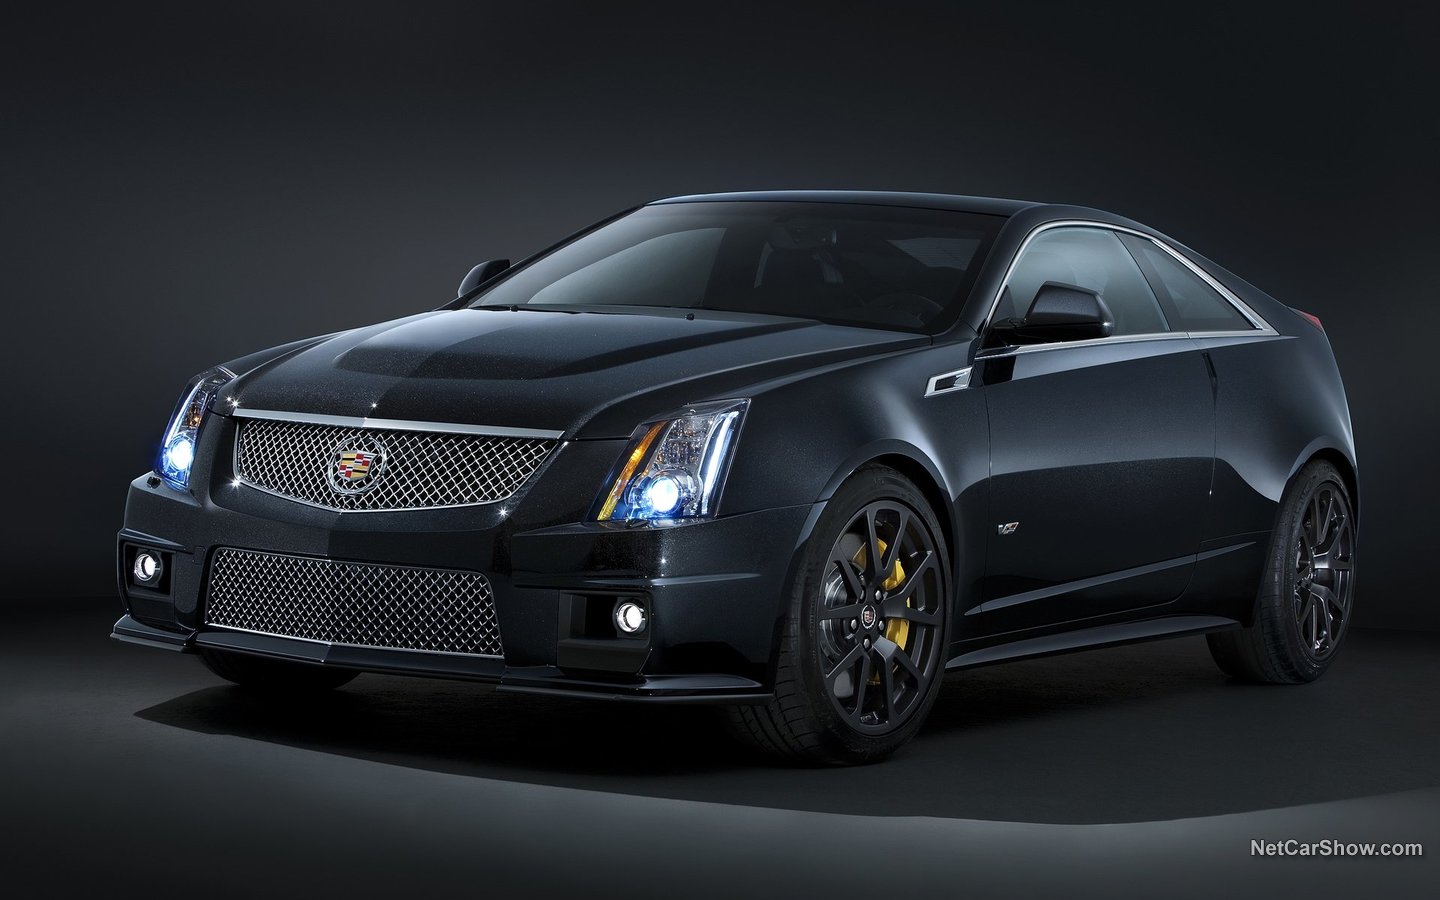 Cadillac CTS-V Black Diamond Edition 2011 030121c3